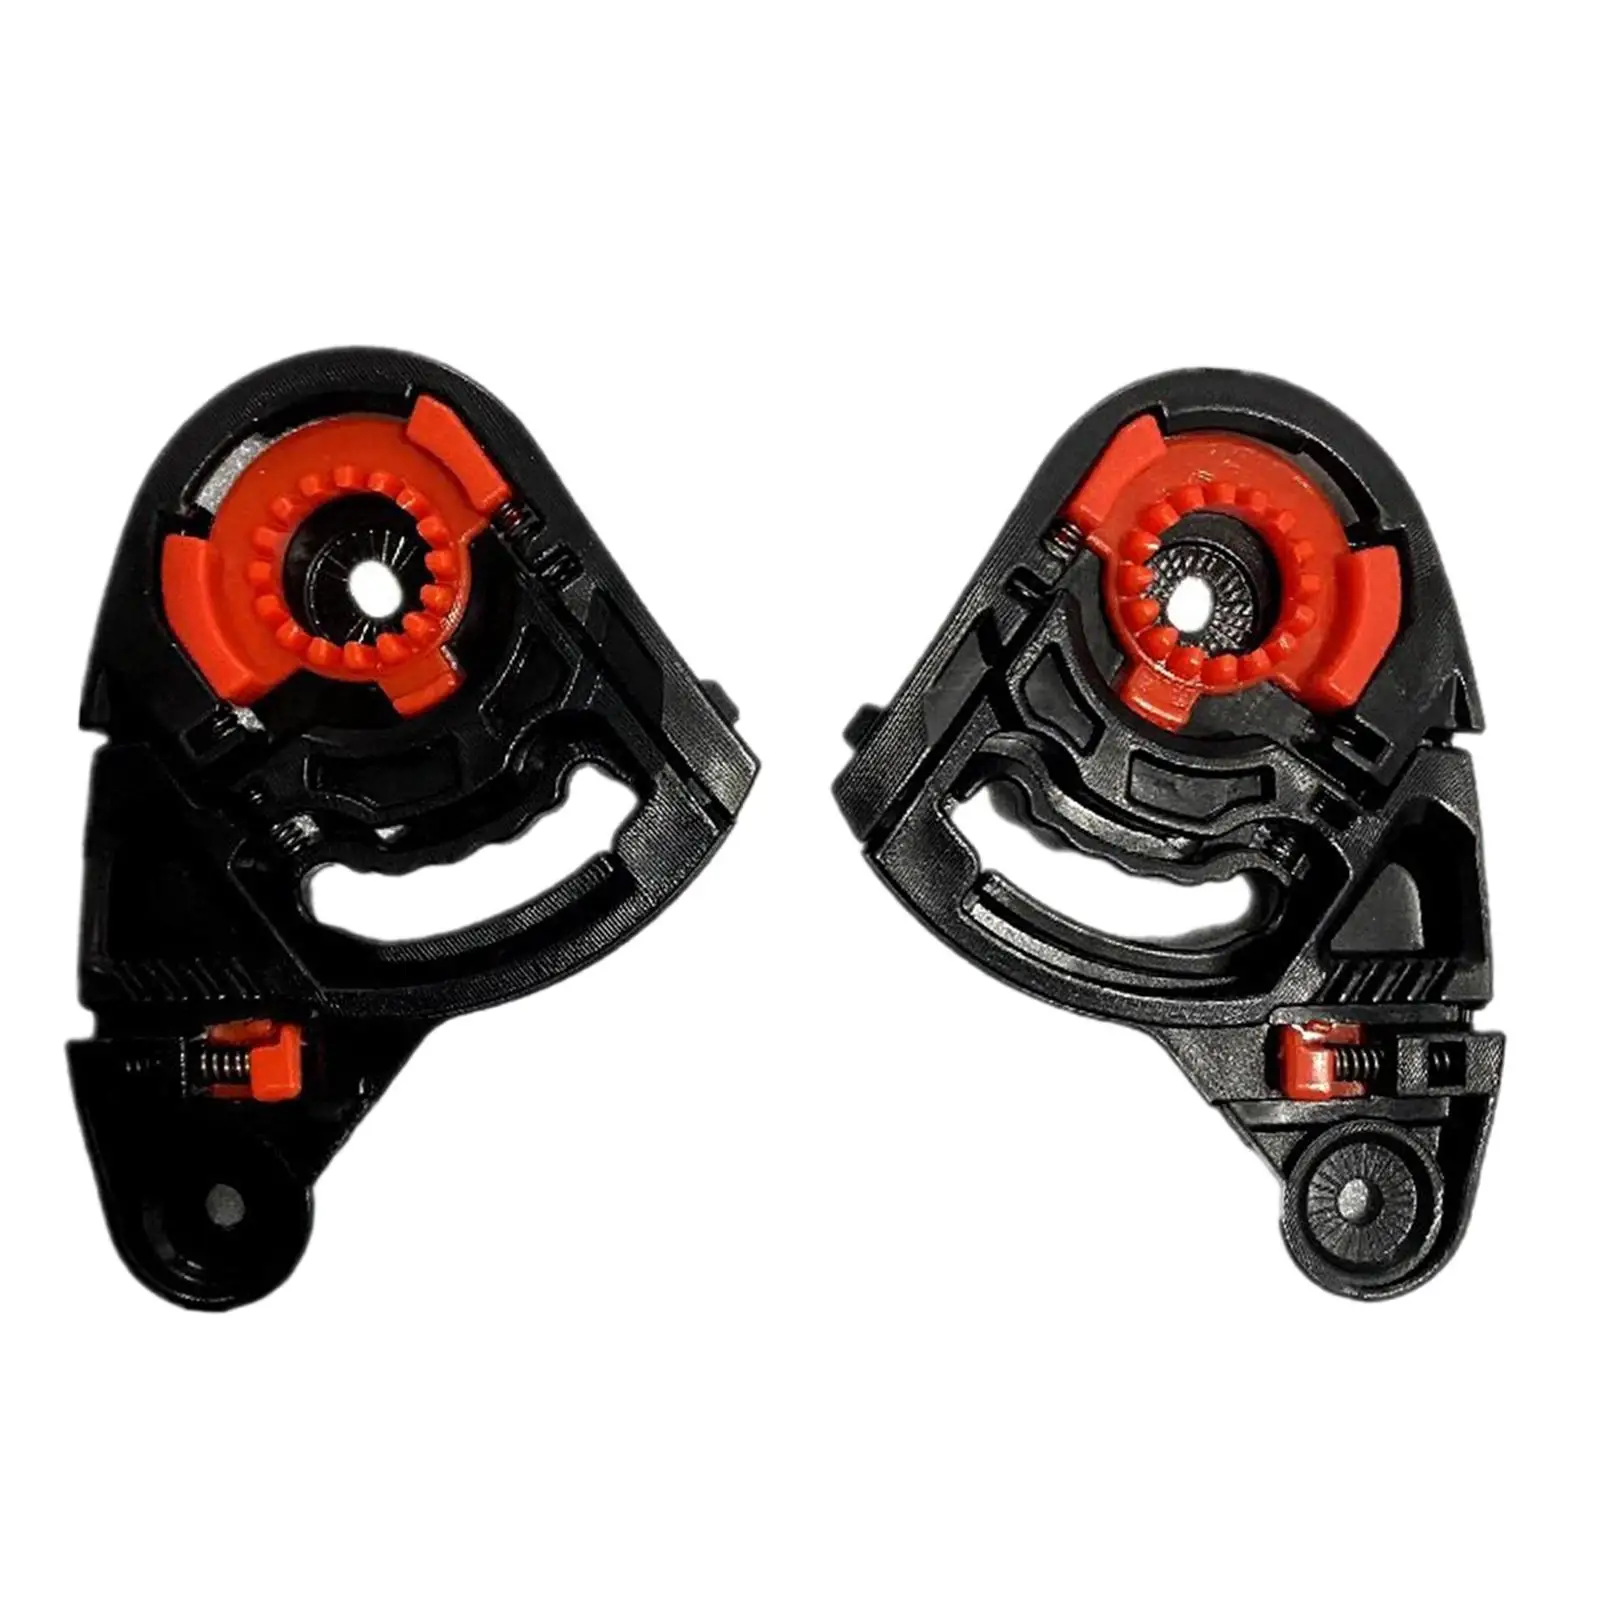 Helmet Gear Plate/Ratchet Set Shield Durable Lens Base Holder Kit for MT Blade2 Revenge2 Rapide Bike Racing